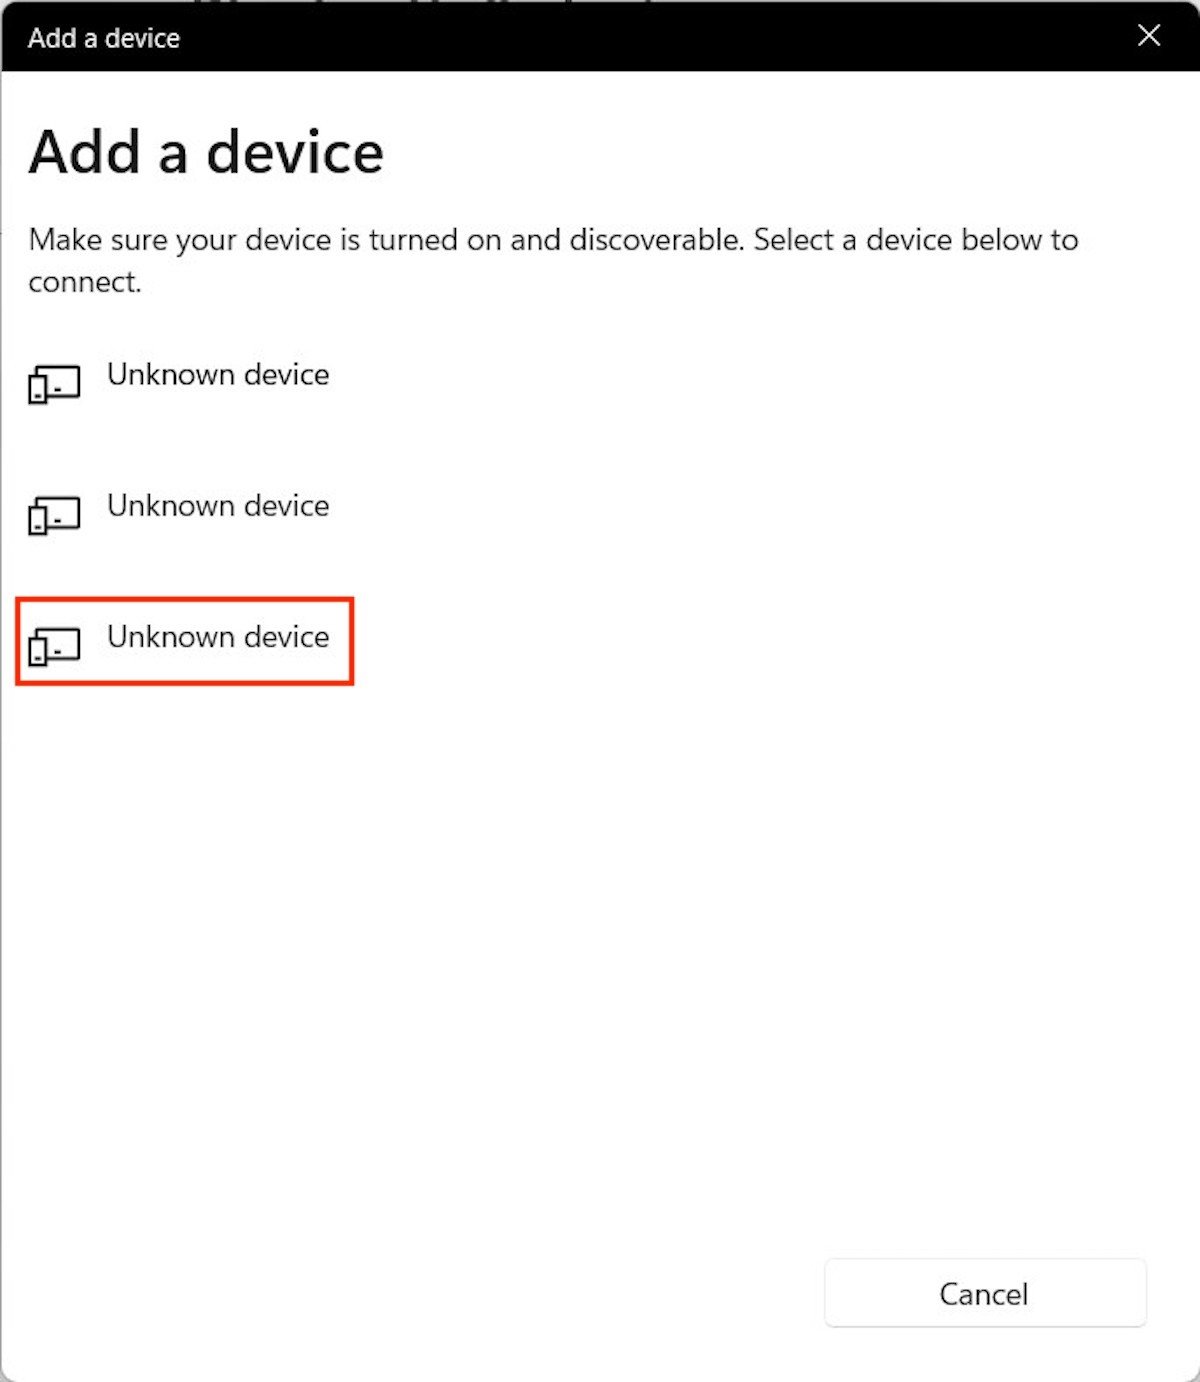 Select a device